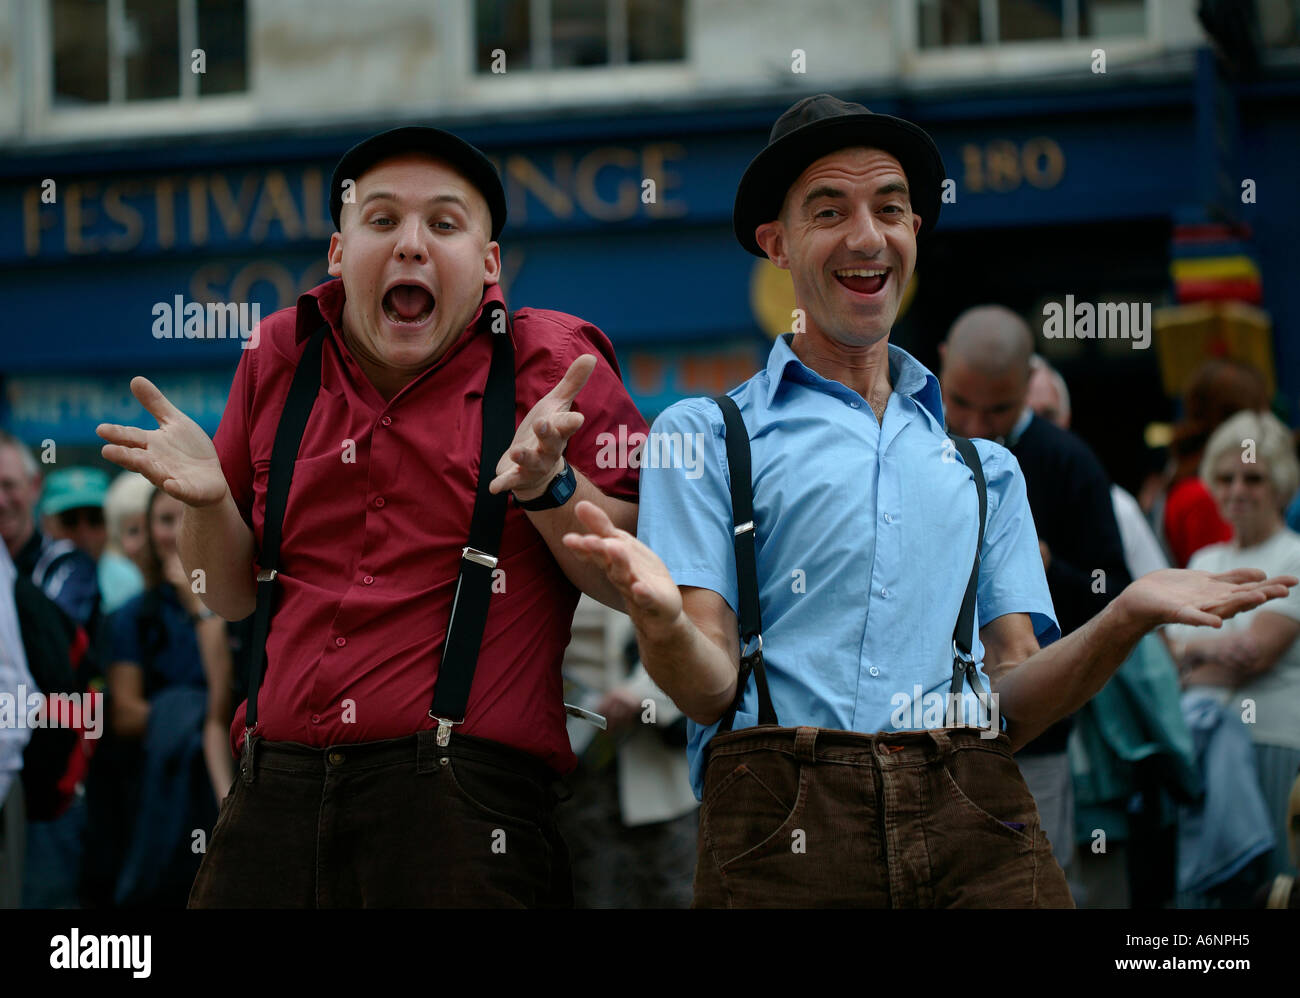 Two Street Performers 'ham it up' during the Edinburgh Fringe Festival, Scotland UK Europe Stock Photo